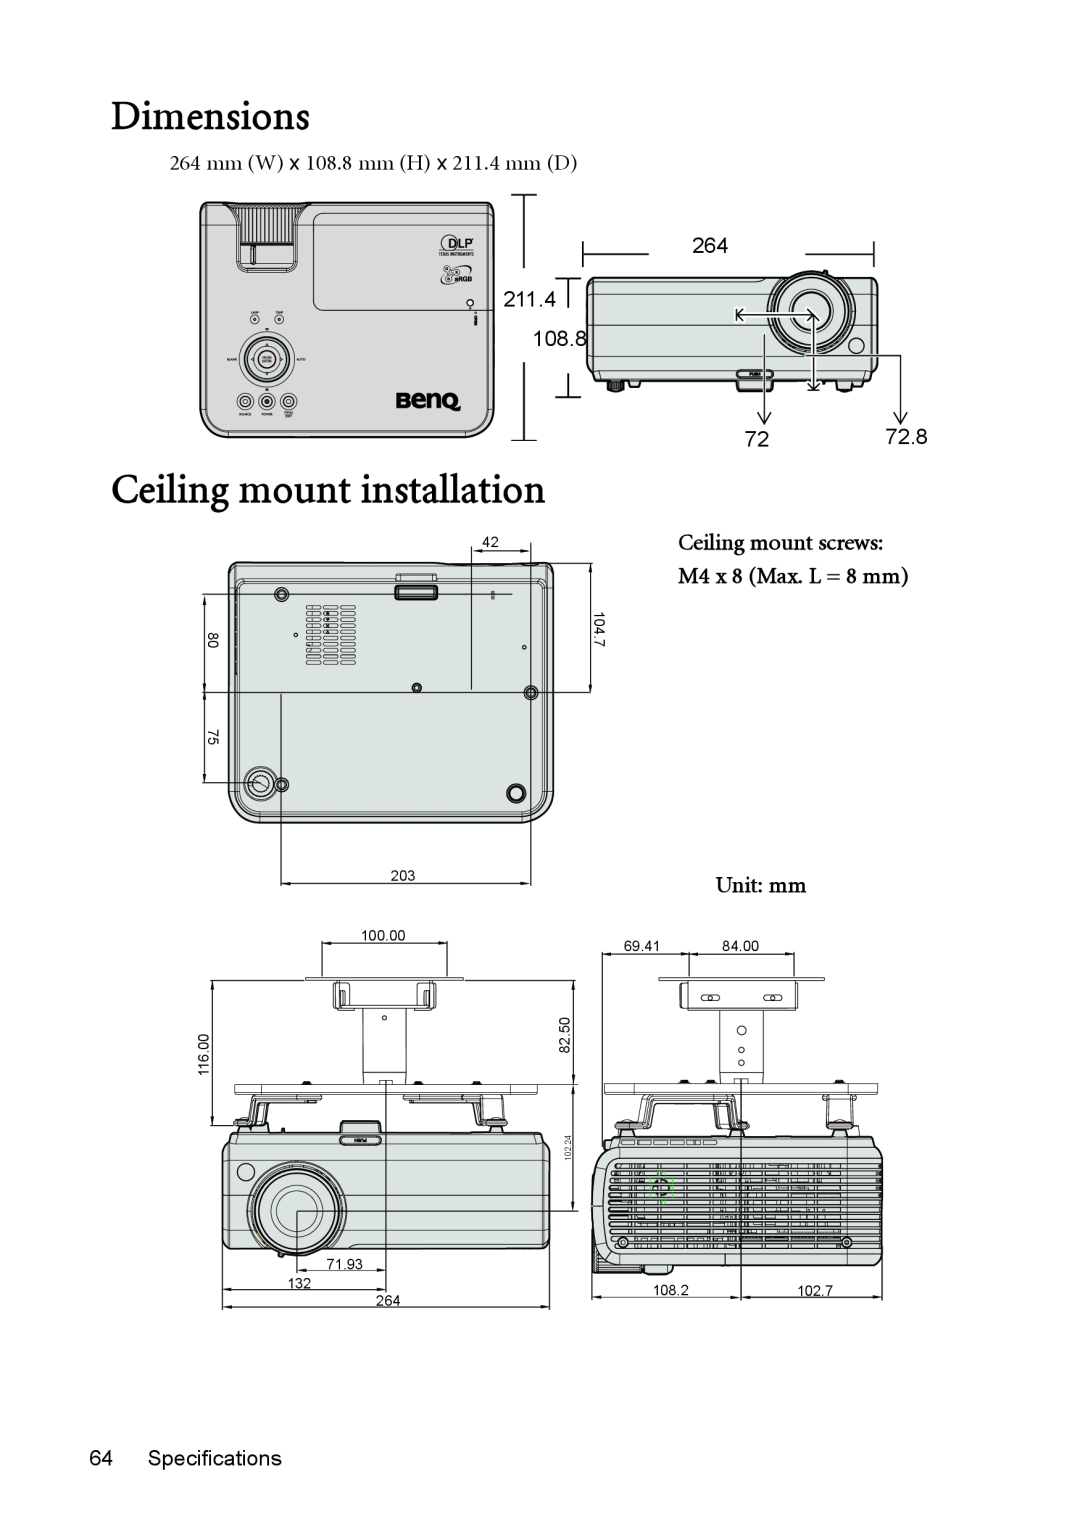 BenQ MX511 user manual Dimensions, Ceiling mount installation, Ceiling mount screws, Unit mm 